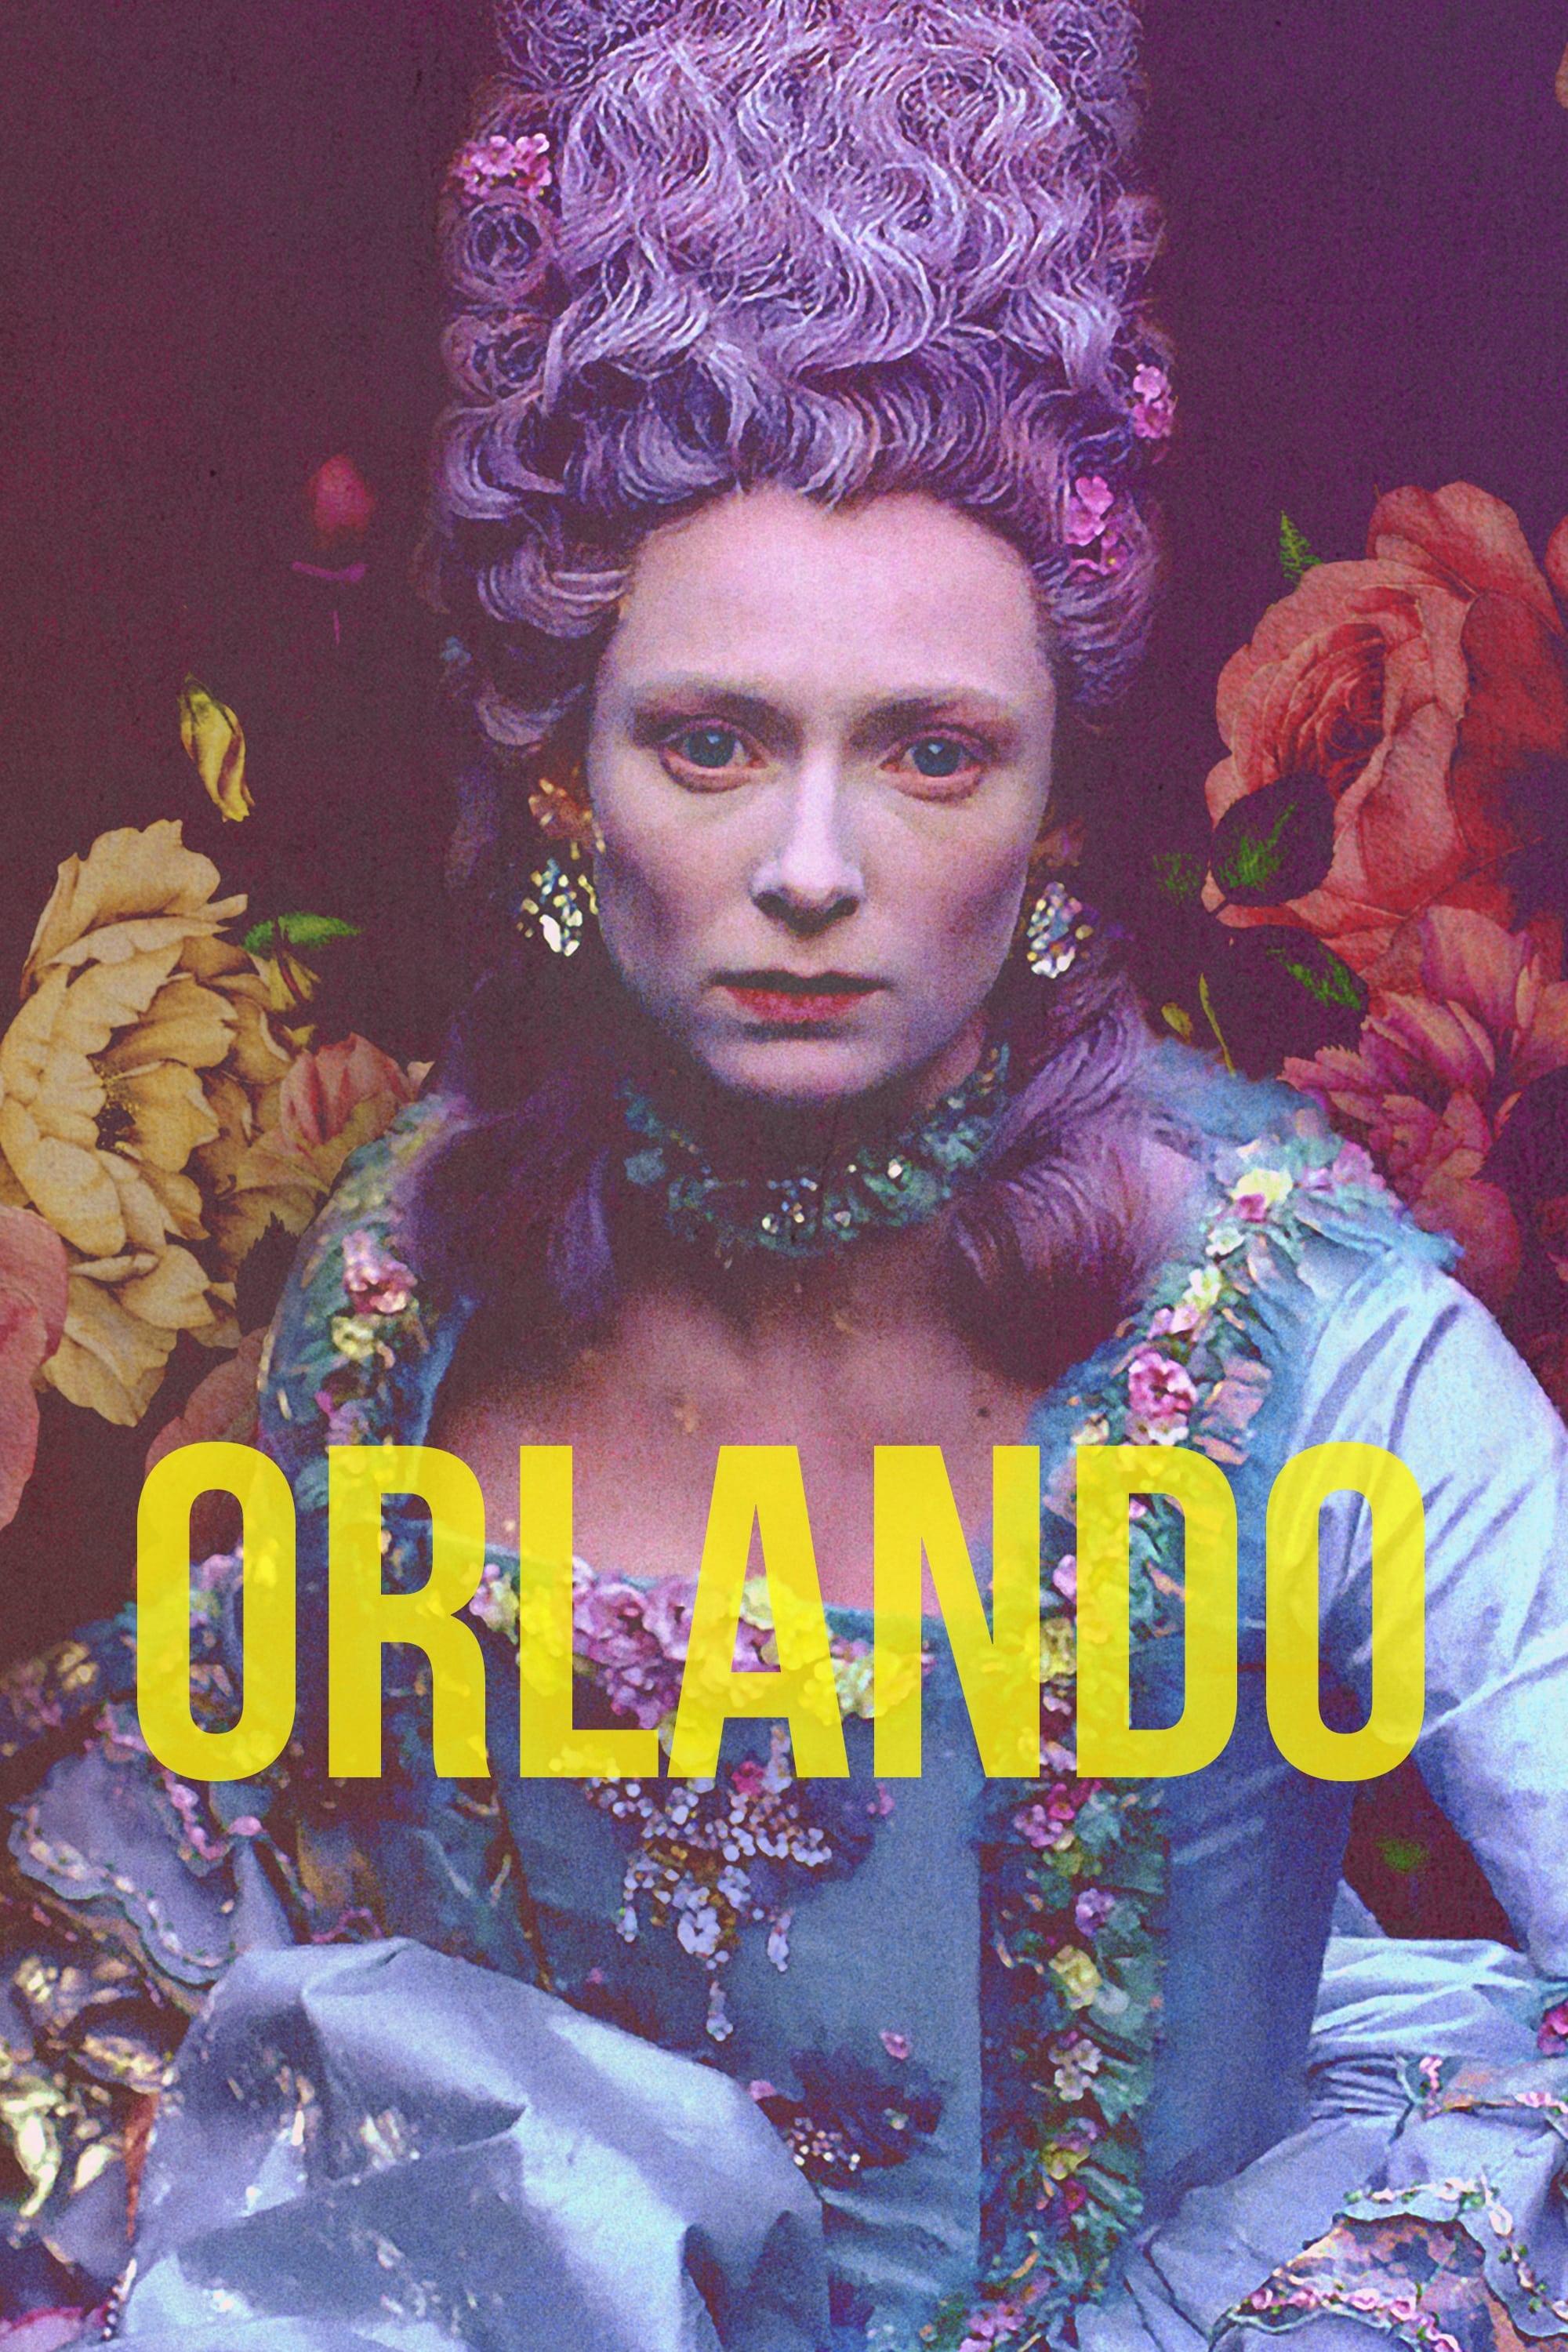 Orlando poster